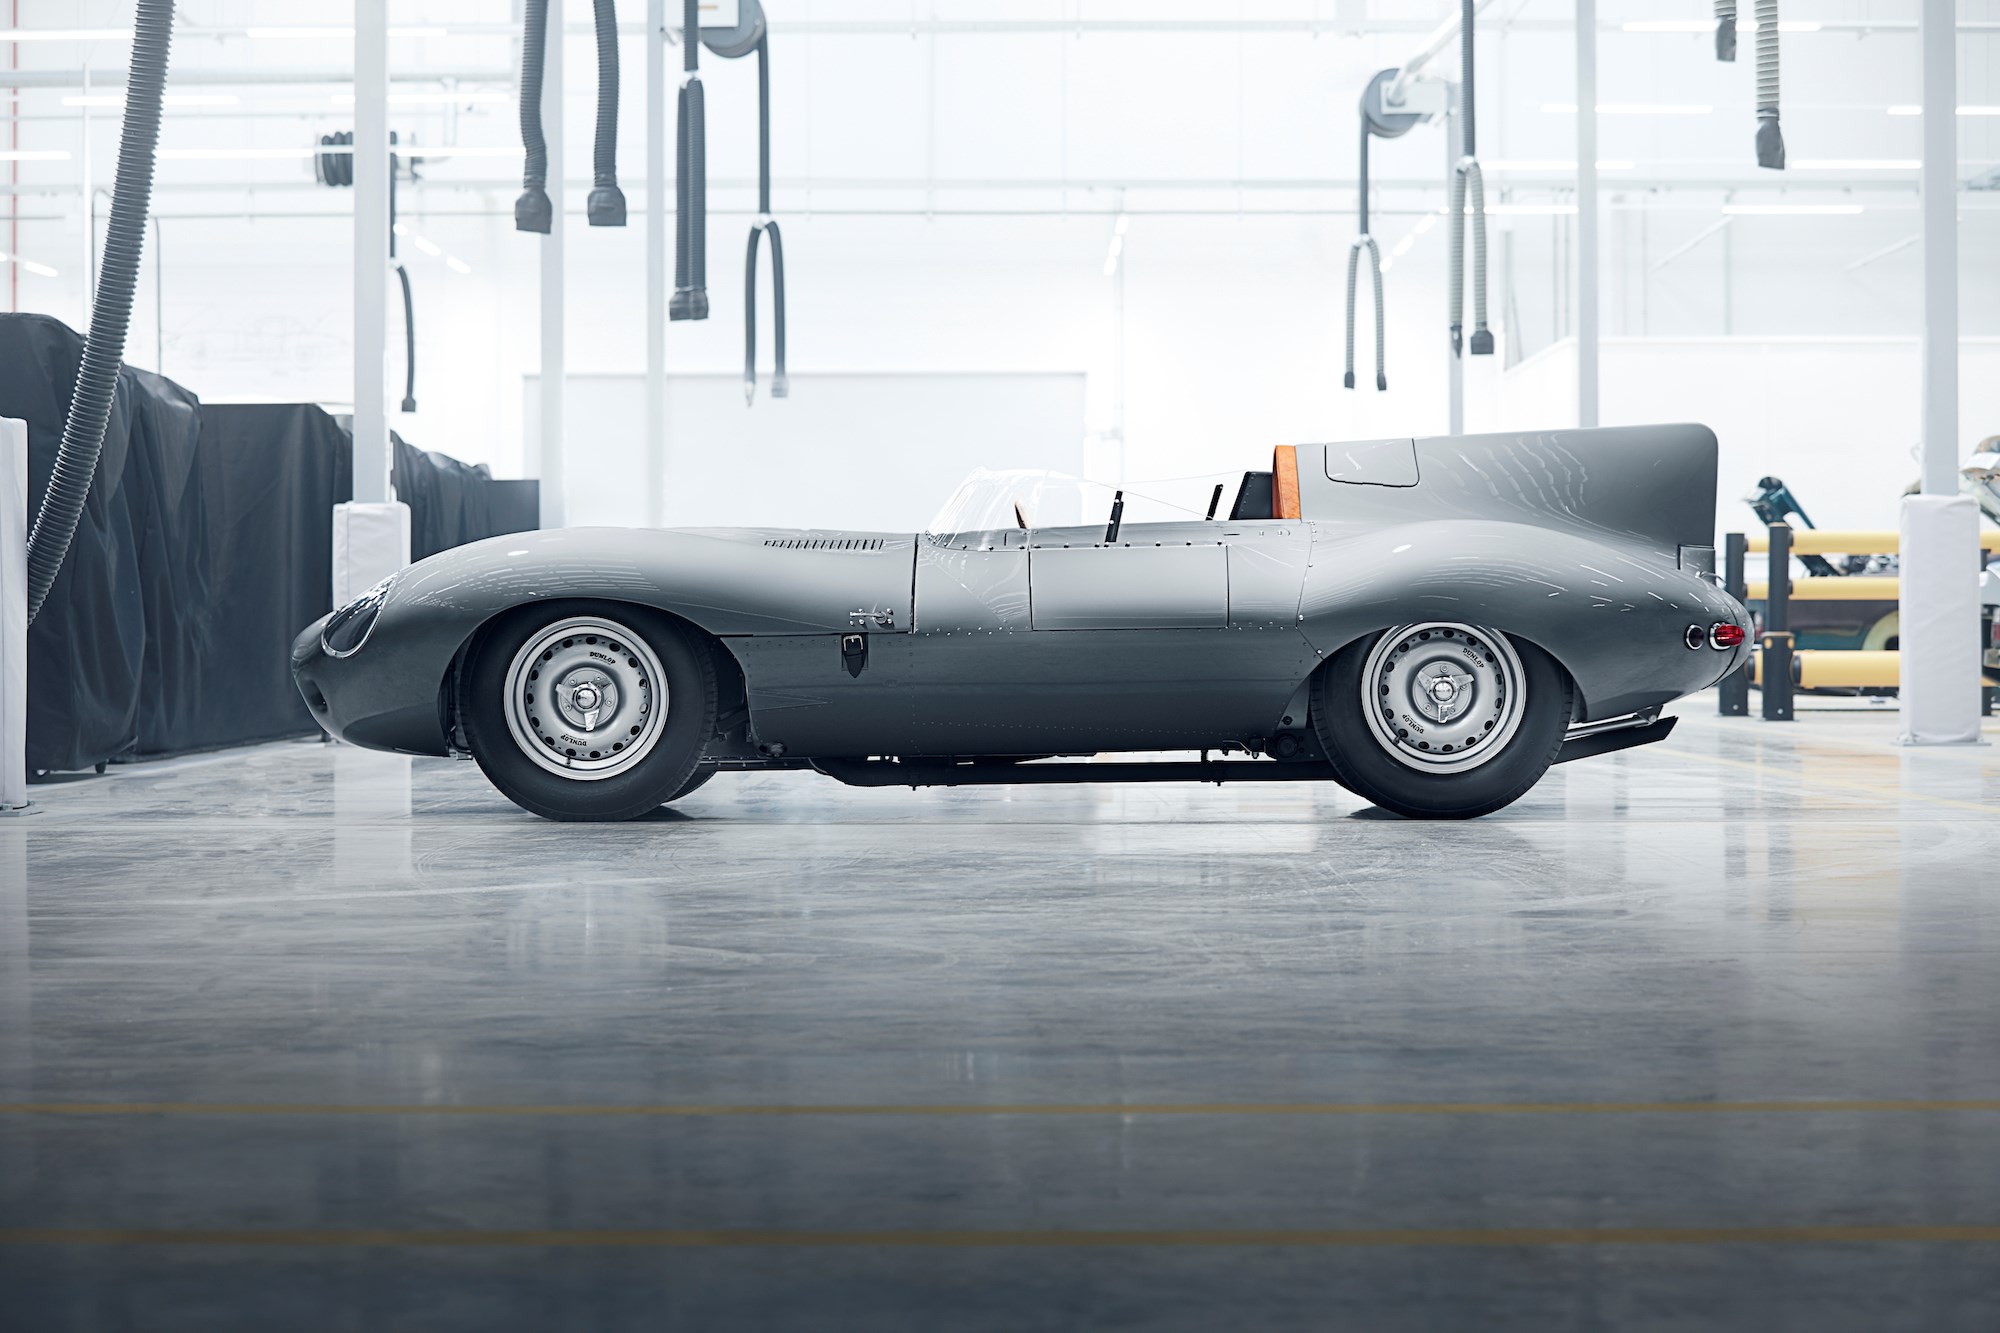 Goodwood - Goodwood Greats: The most original long nose Jaguar D